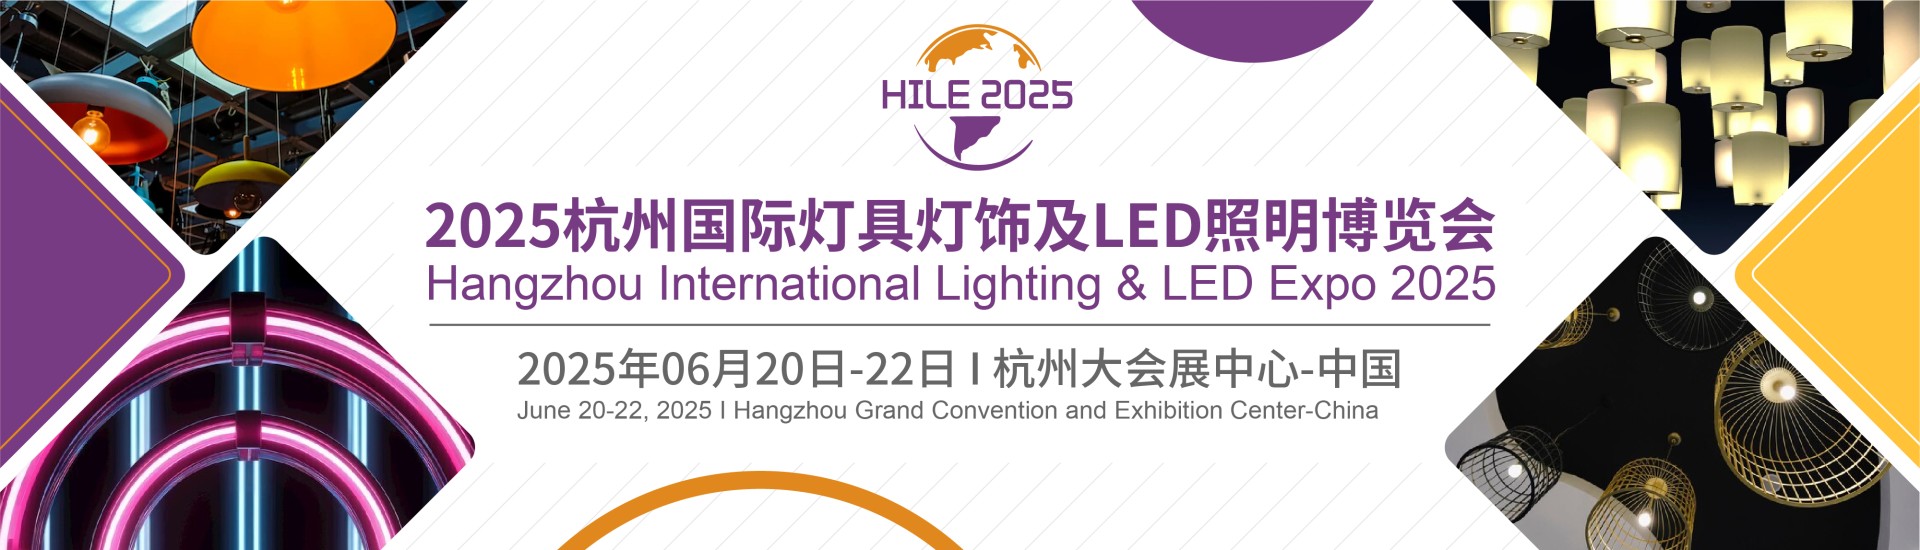 Hangzhou International Lighting & LED Expo 2025